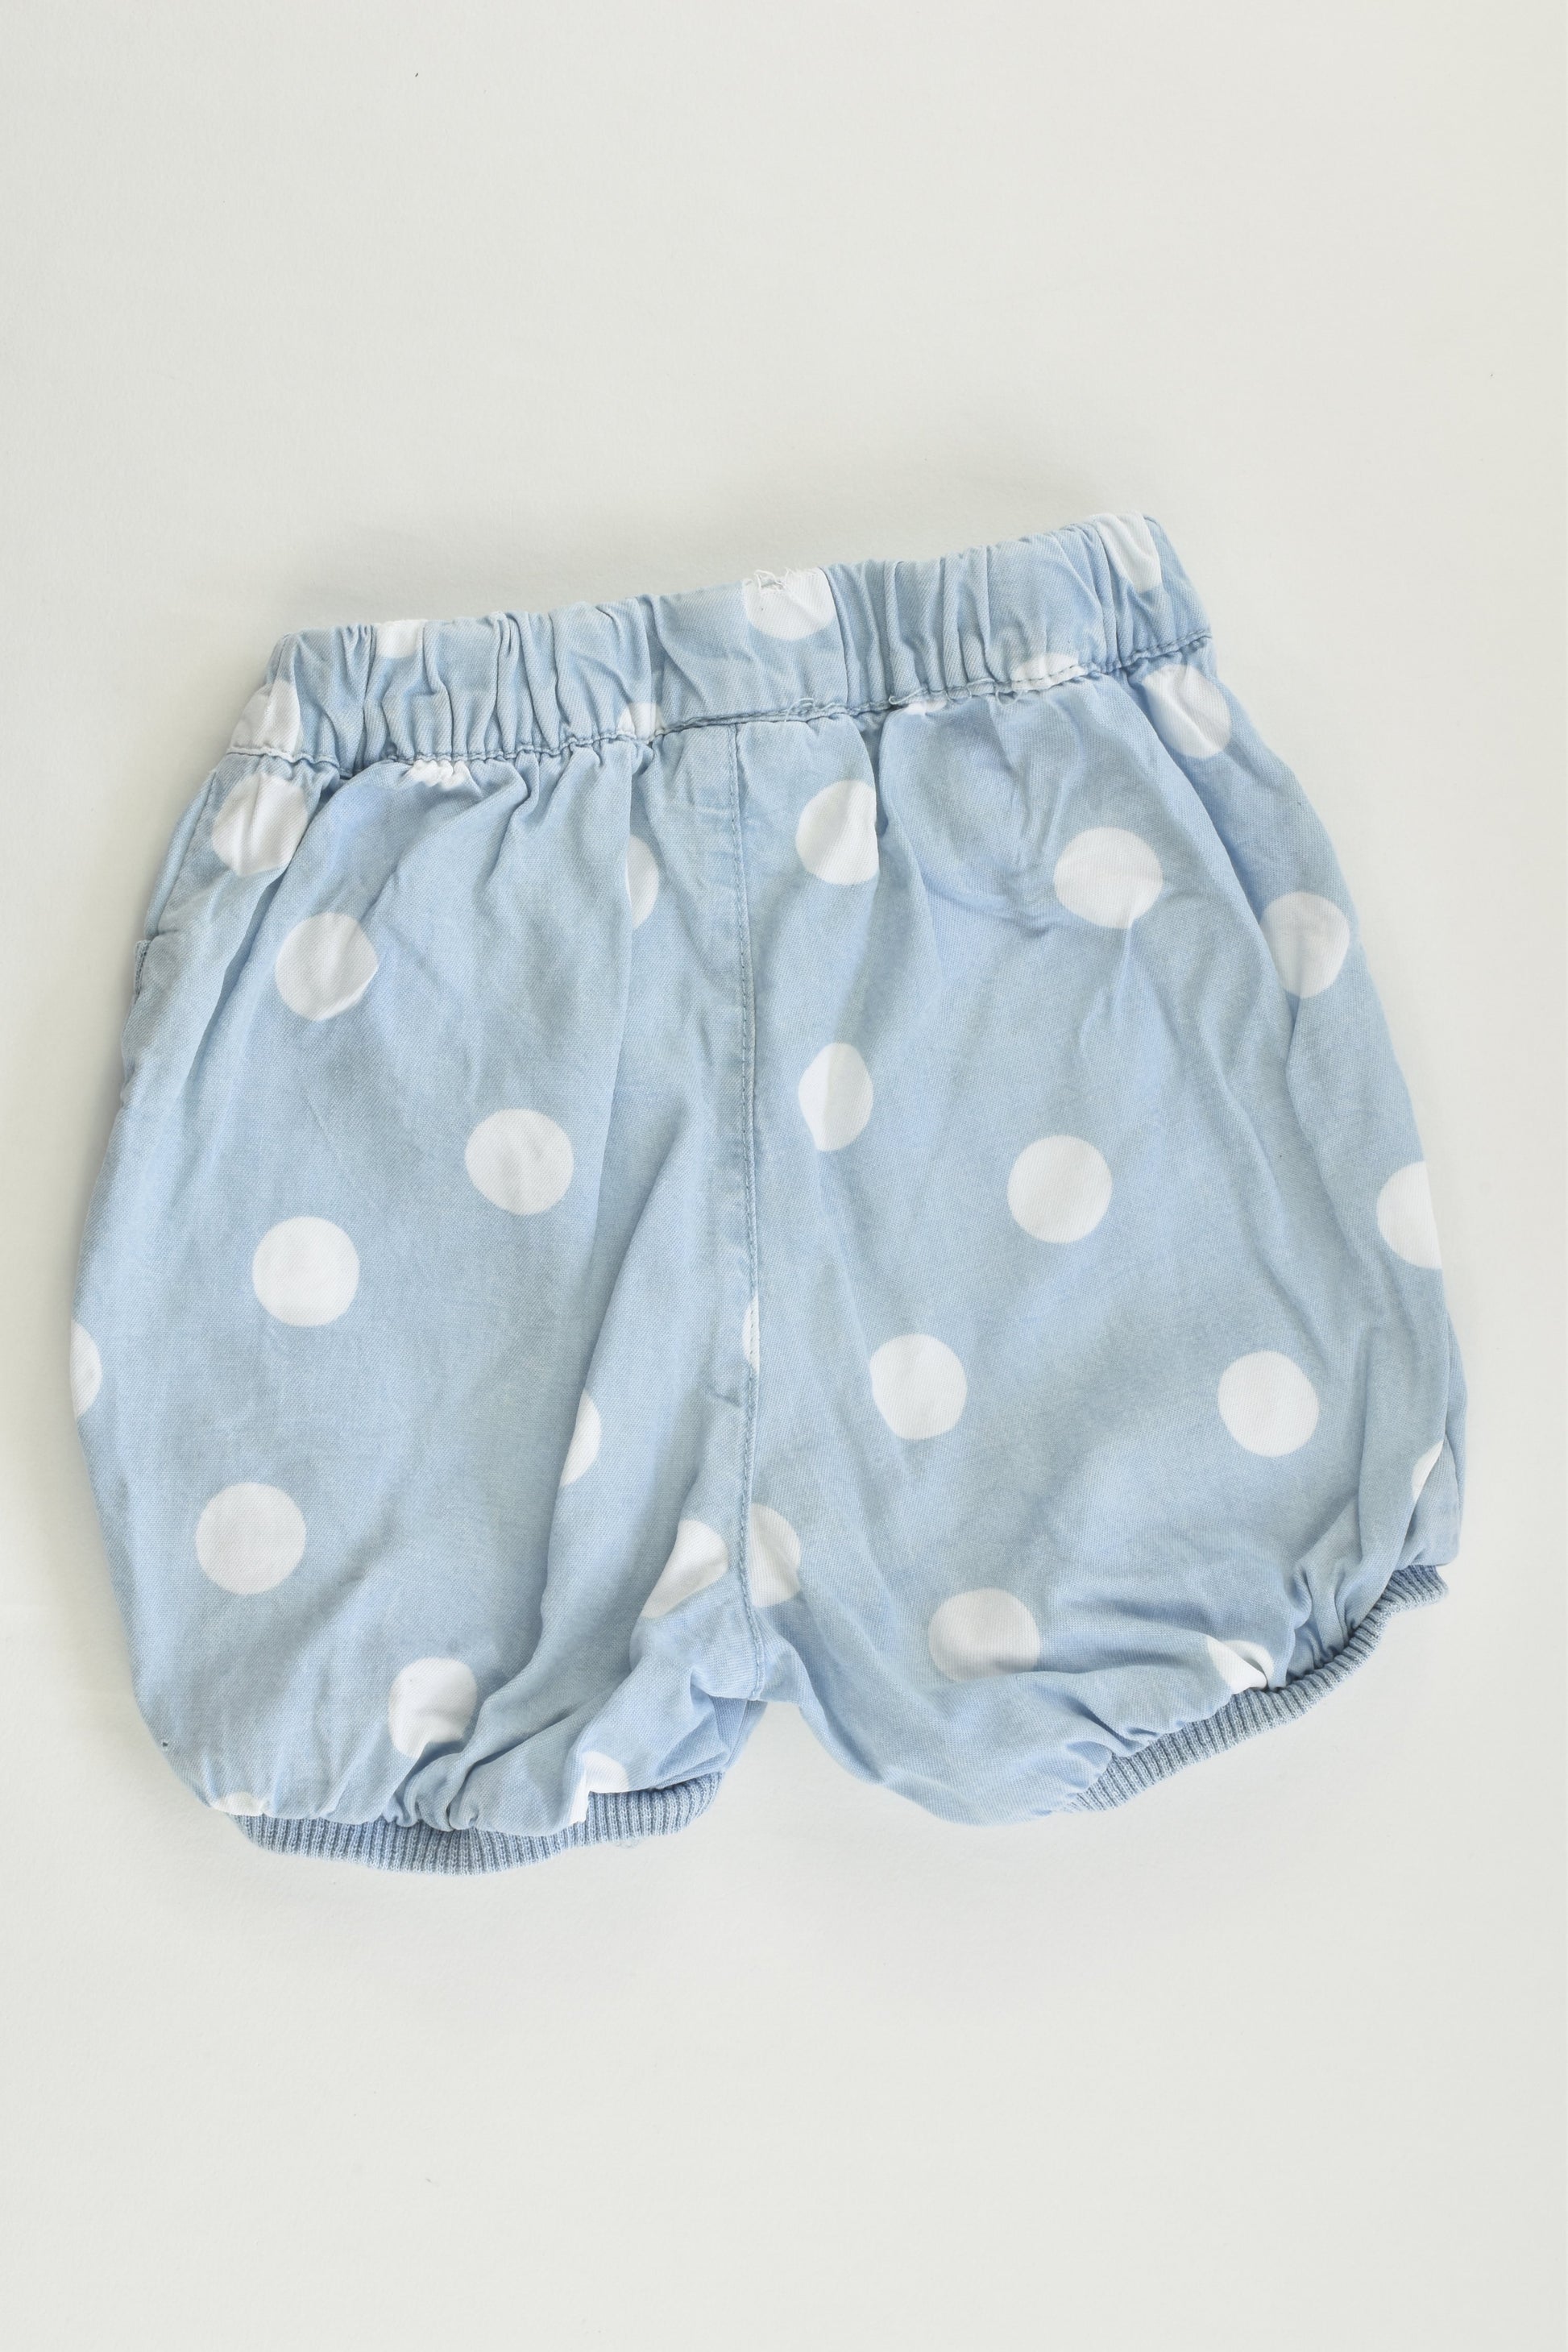 Seed Heritage Size 00 (3-6 months) Polka Dots Lightweight Denim Shorts